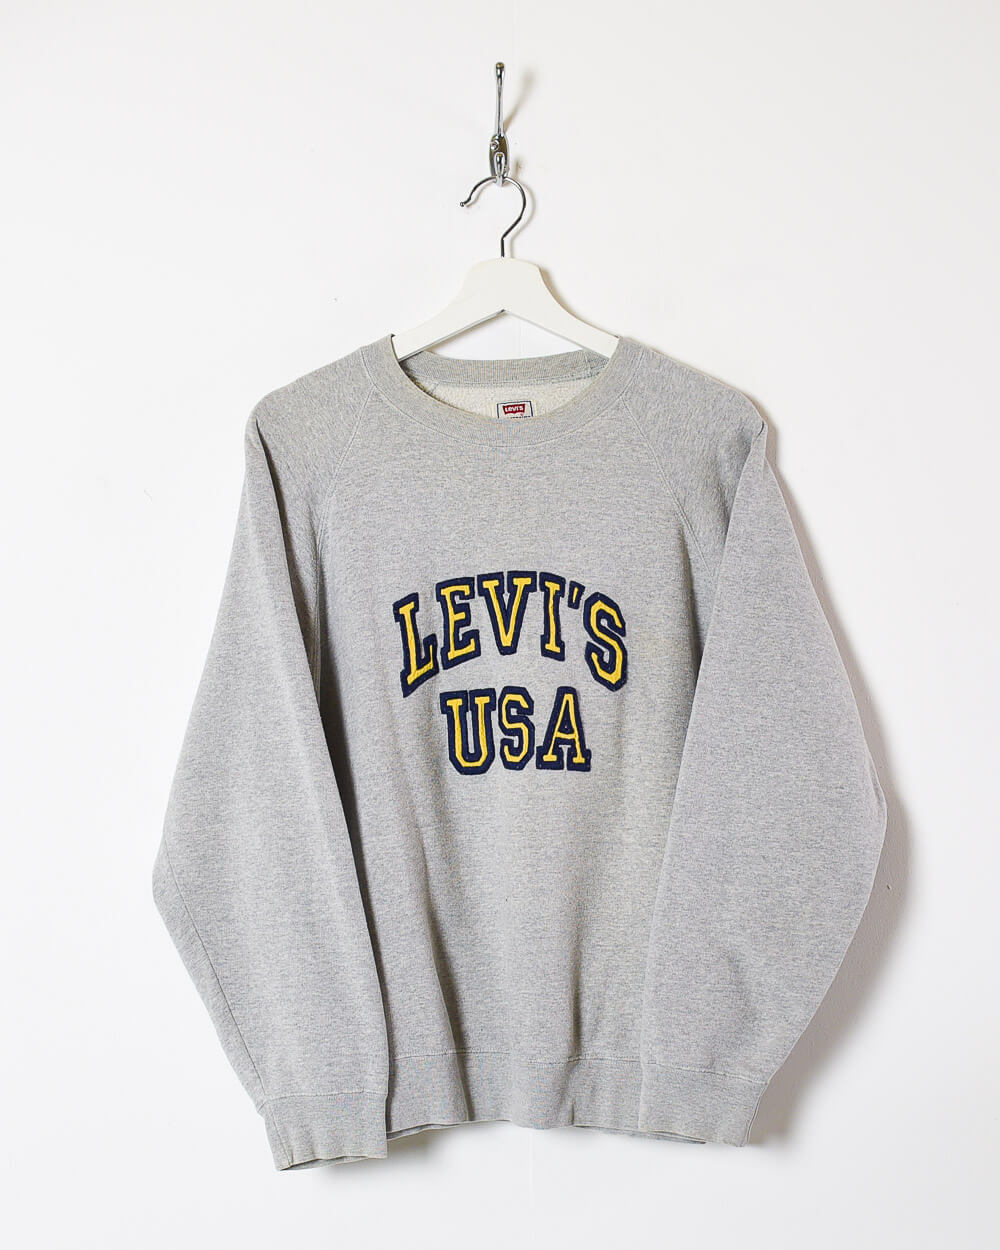 Stone Levi Strauss & Co. USA Sweatshirt - Small